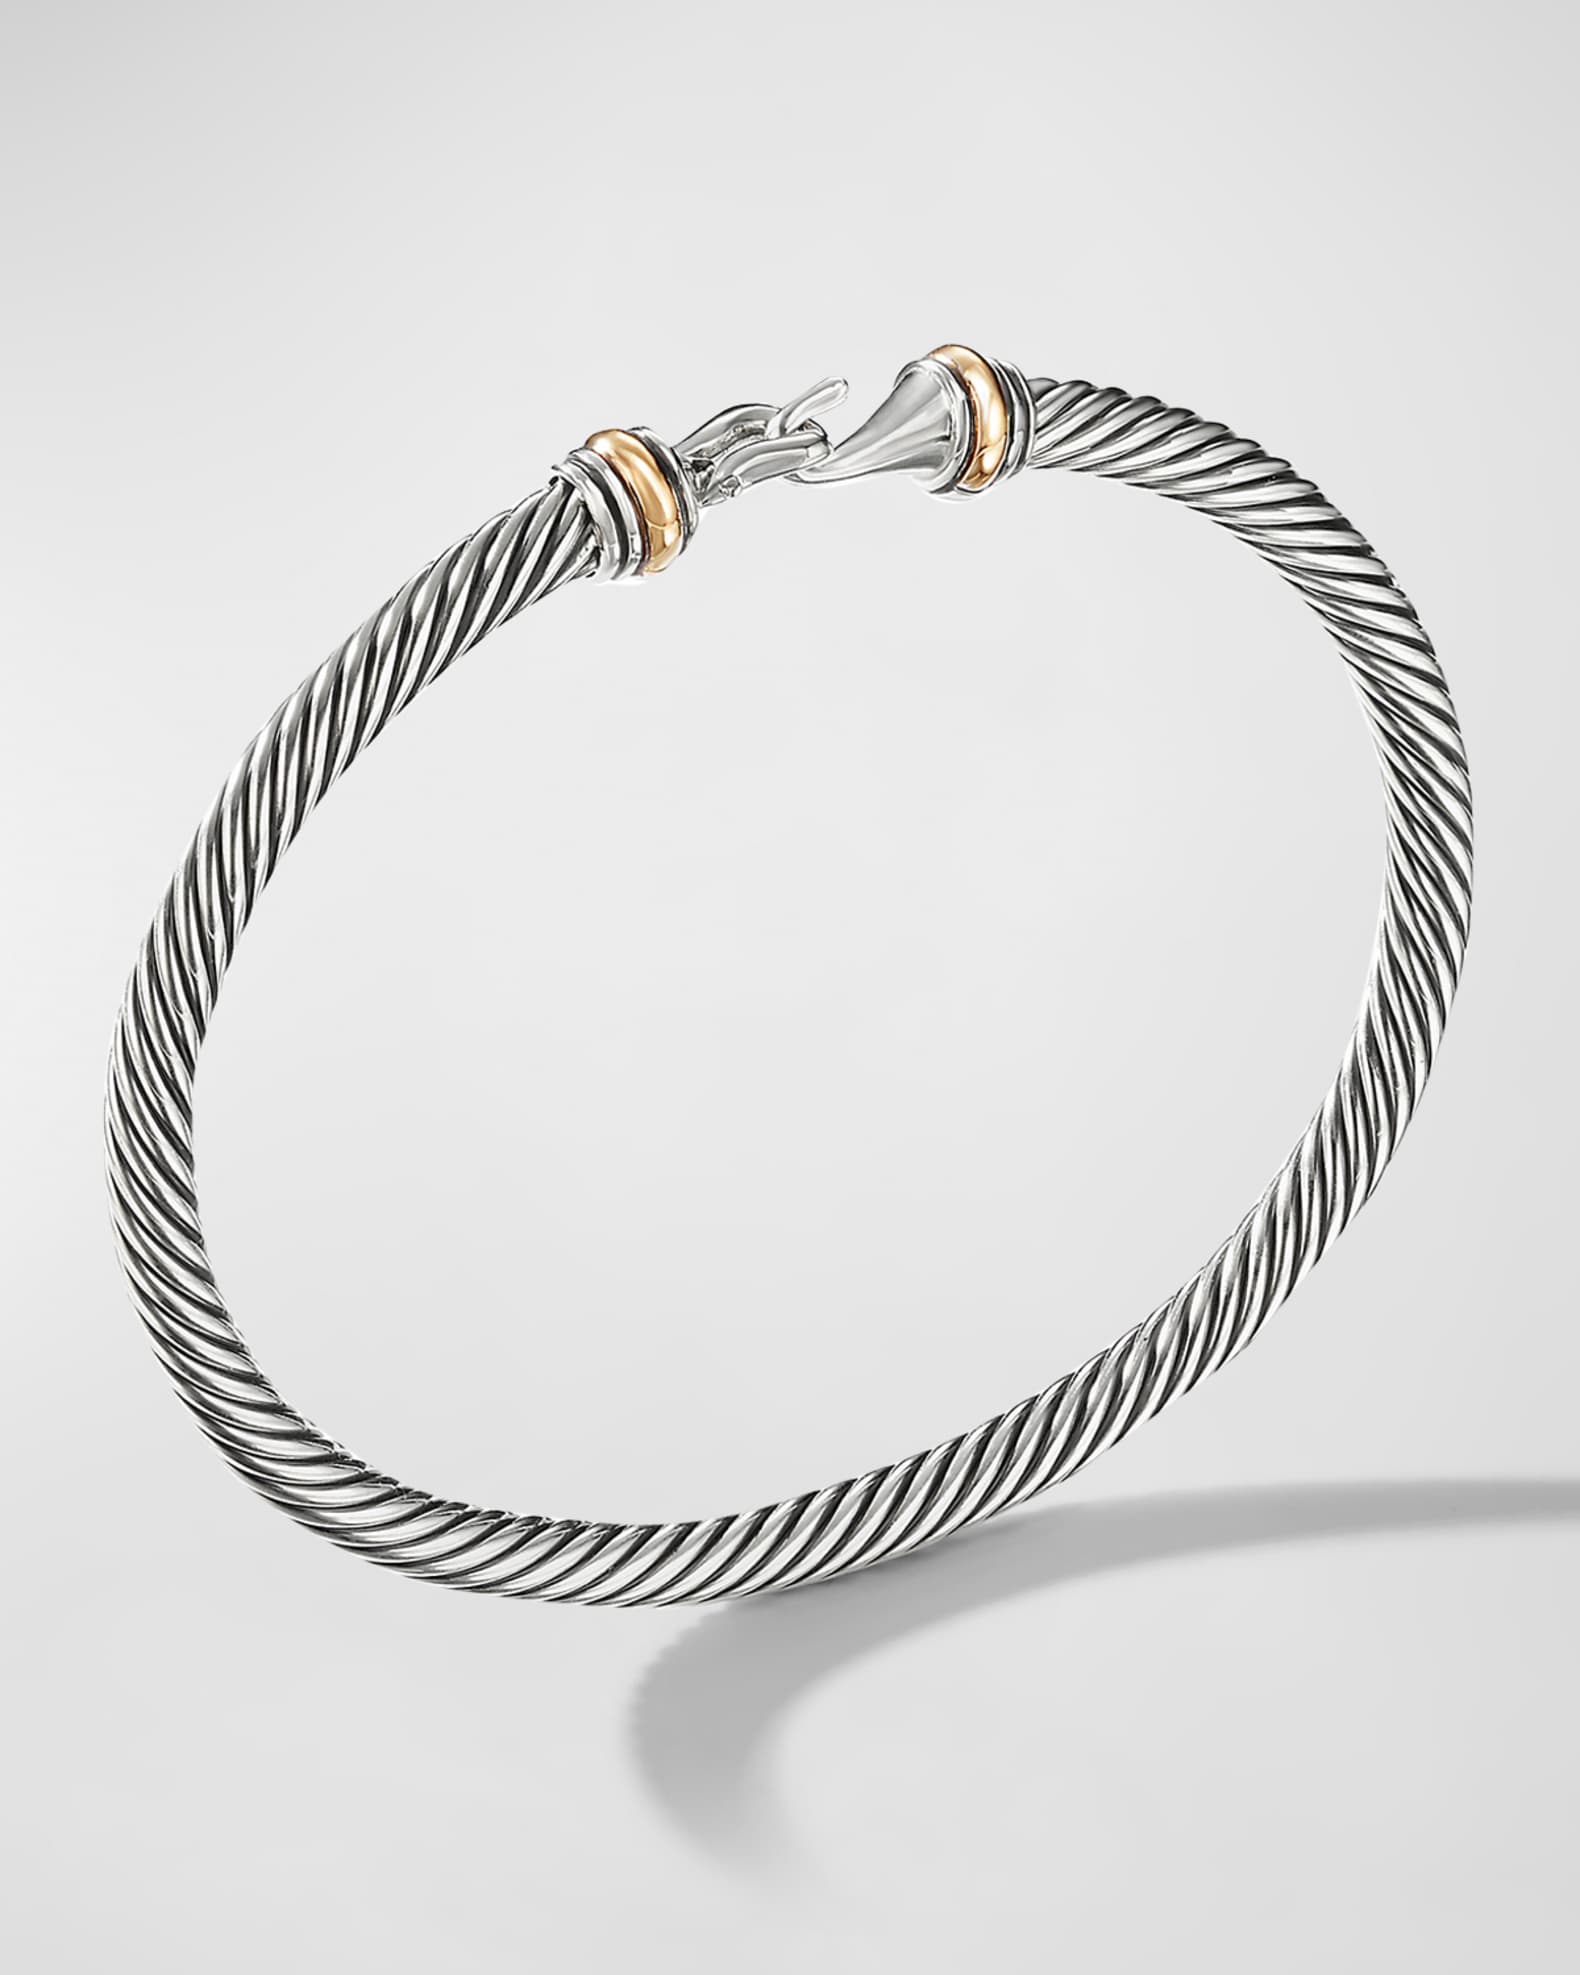 DY 7MM Gold Hook Twisted Wire Buckle Bracelet in Sterling Silver